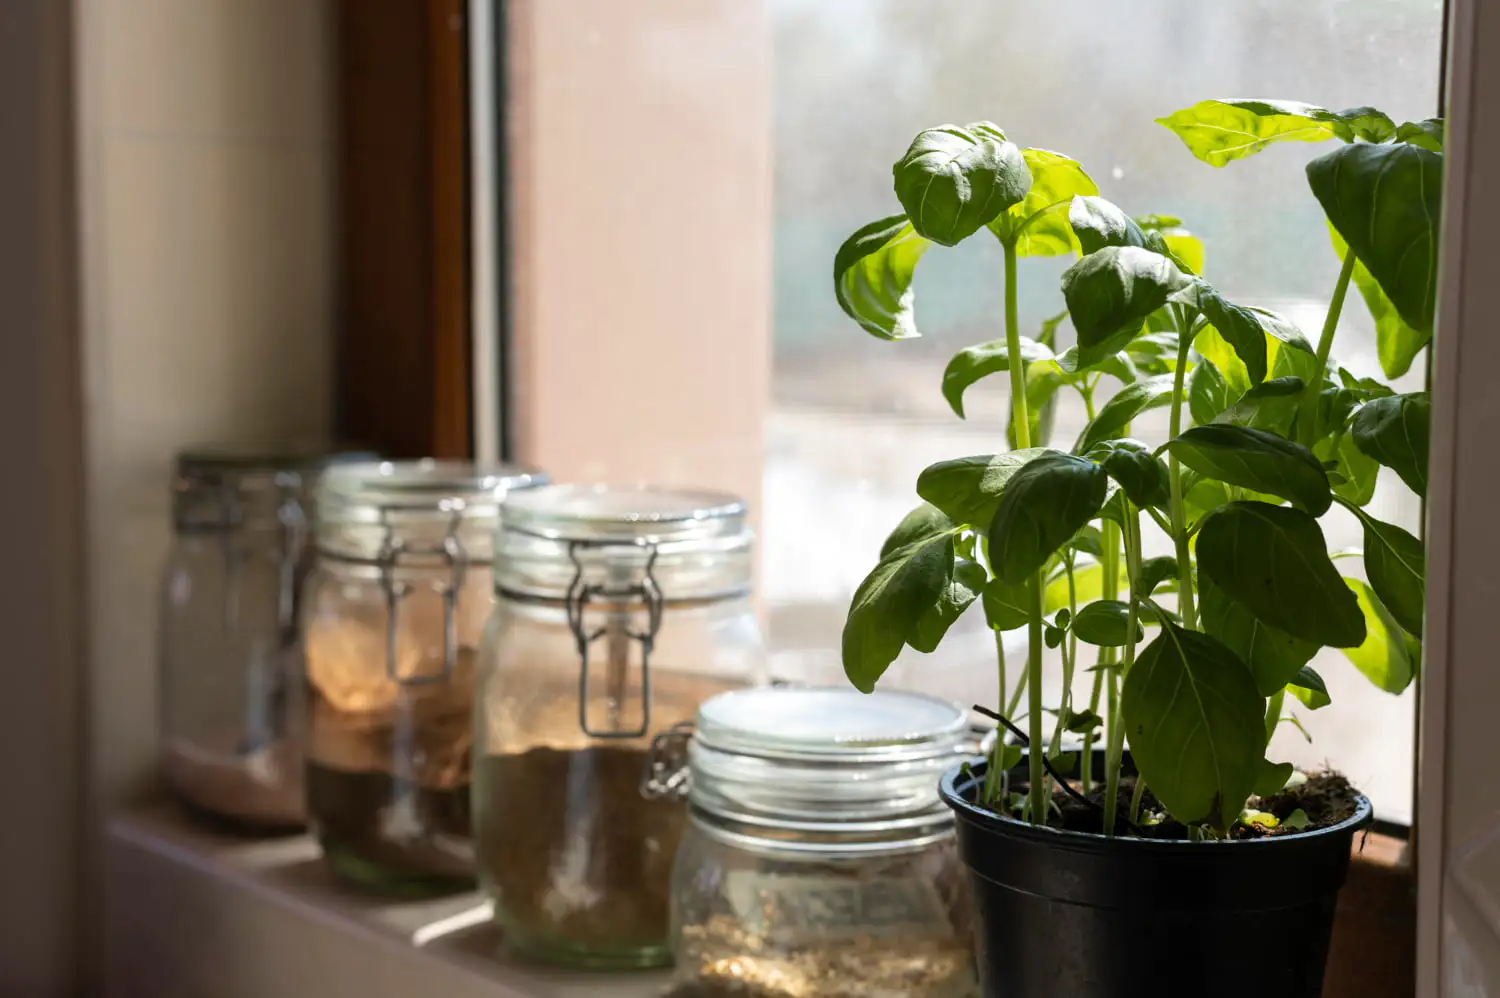 Sunlit basil plant thriving indoors demonstrating effective indoor plant lighting strategies